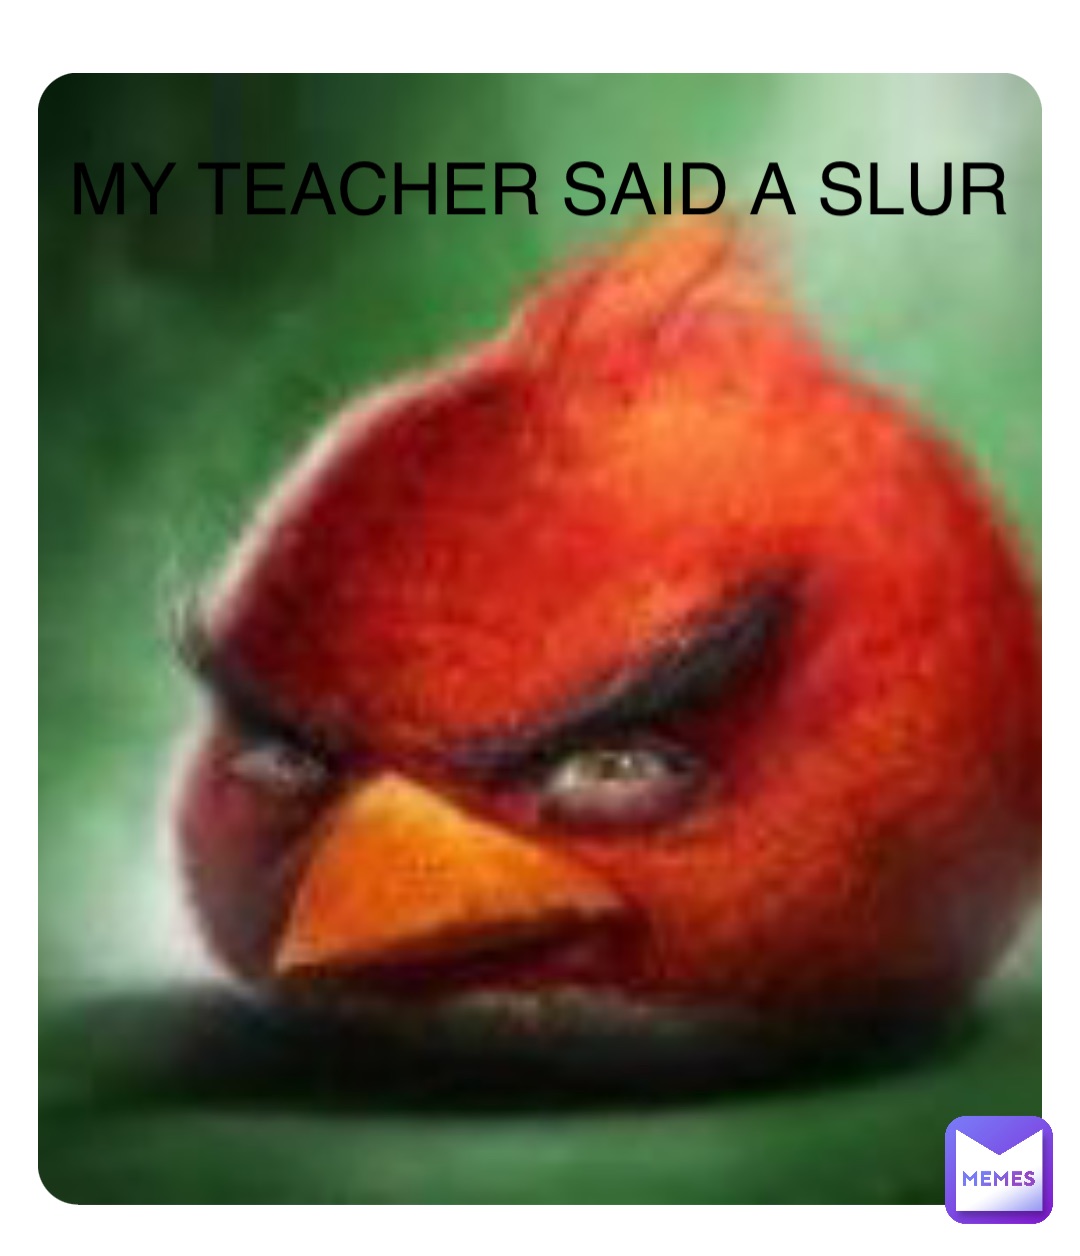 MY TEACHER SAID A SLUR